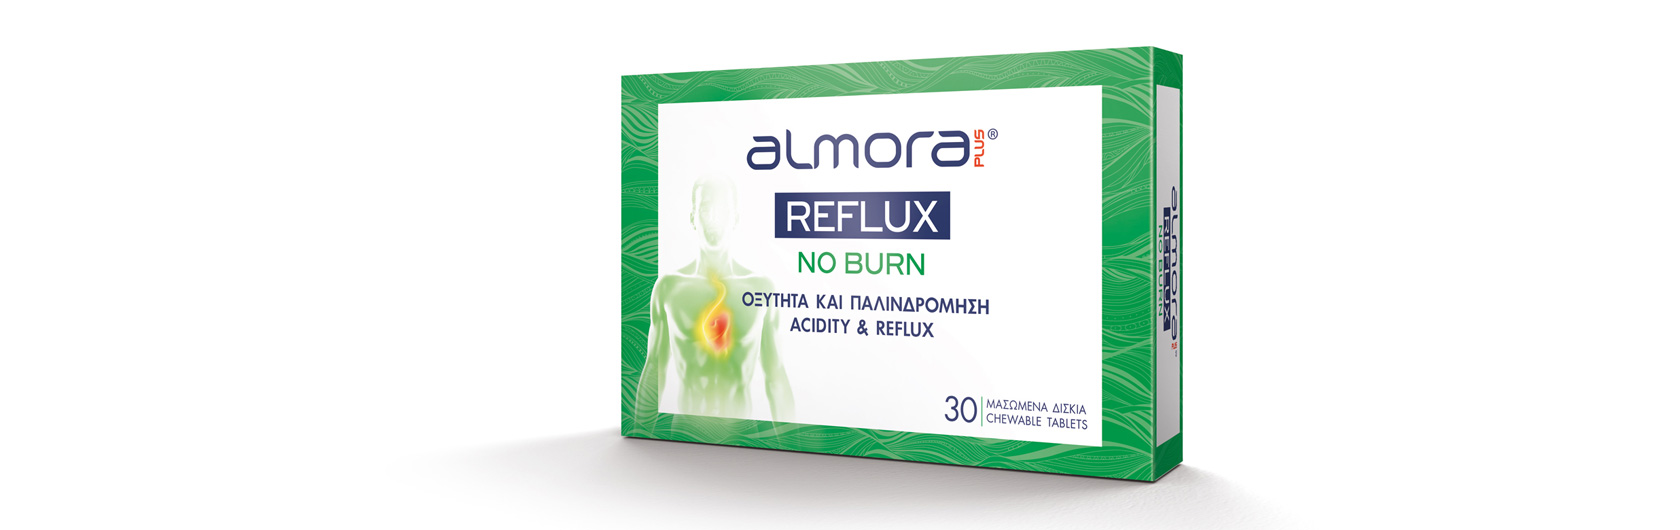 almora PLUS® REFLUX NO BURN